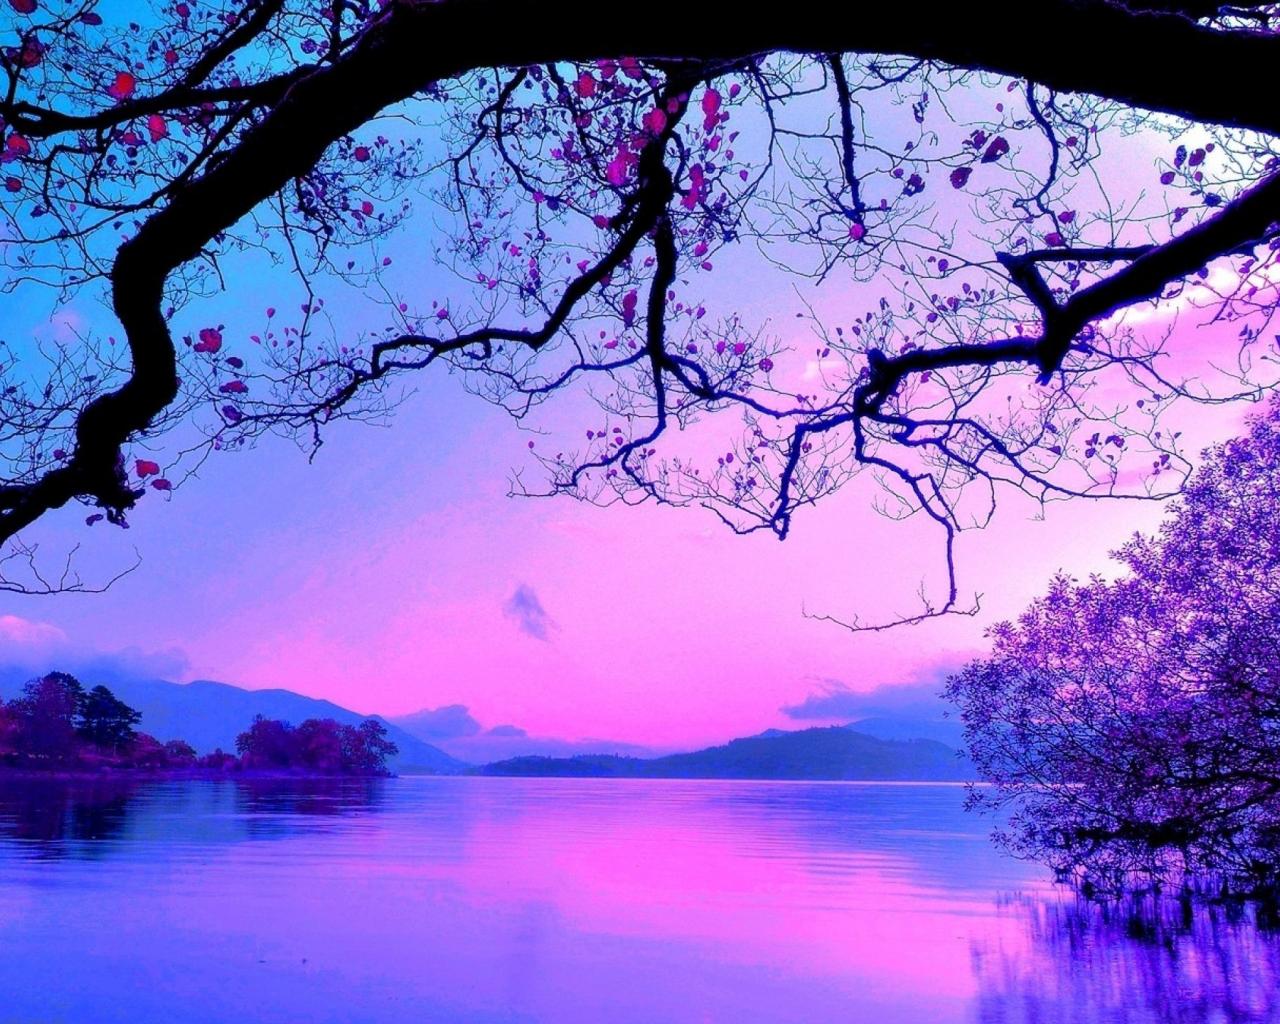 Blue and Purple sunset